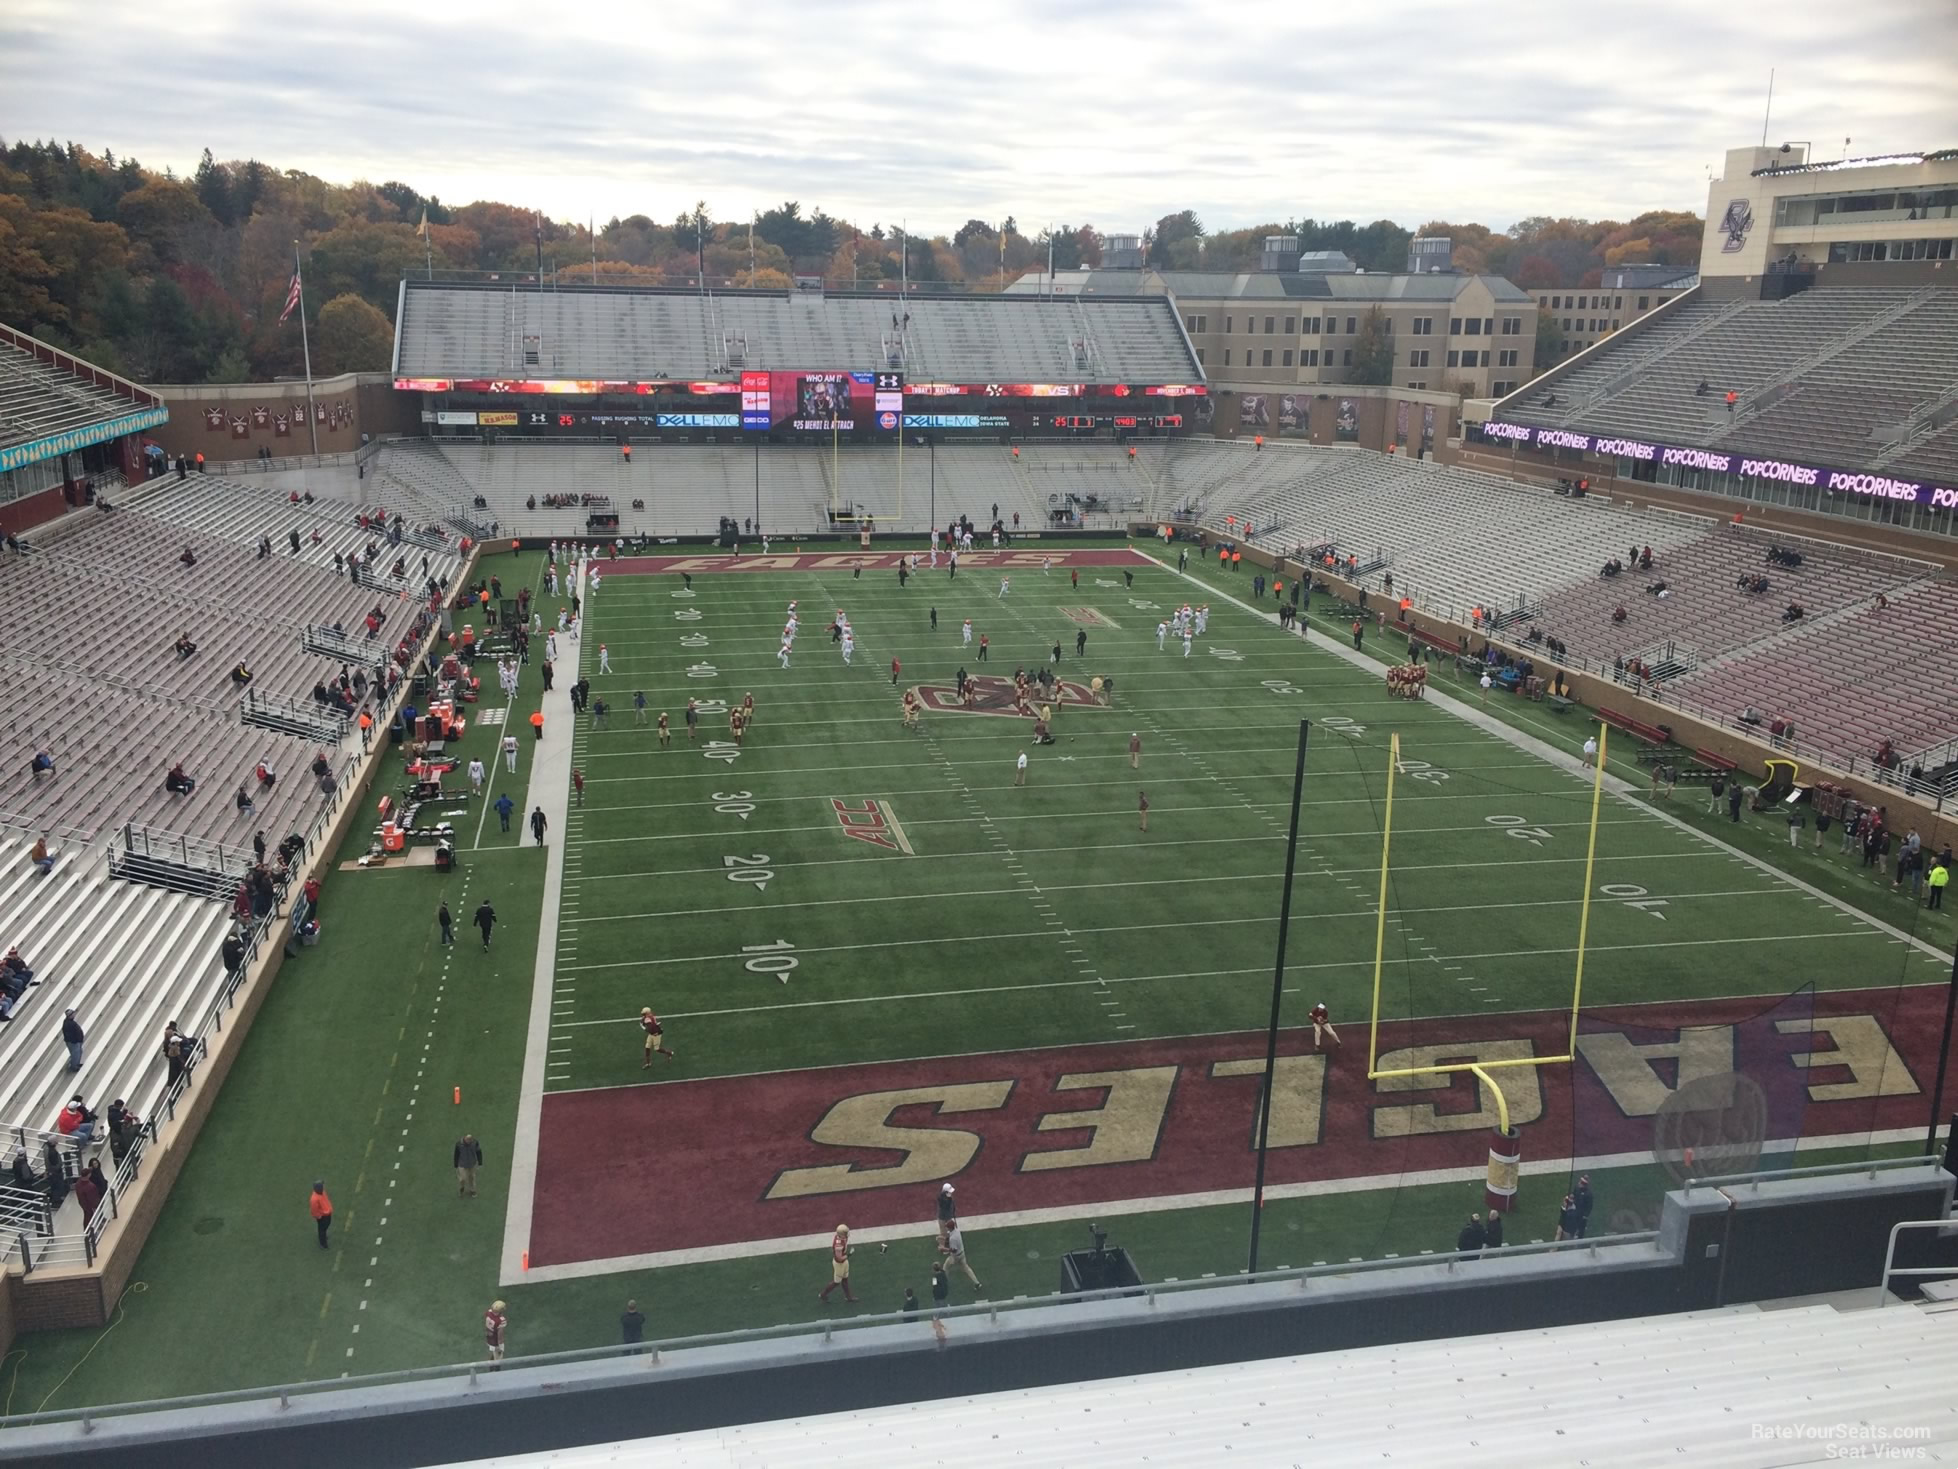 section ww, row 15 seat view  - alumni stadium